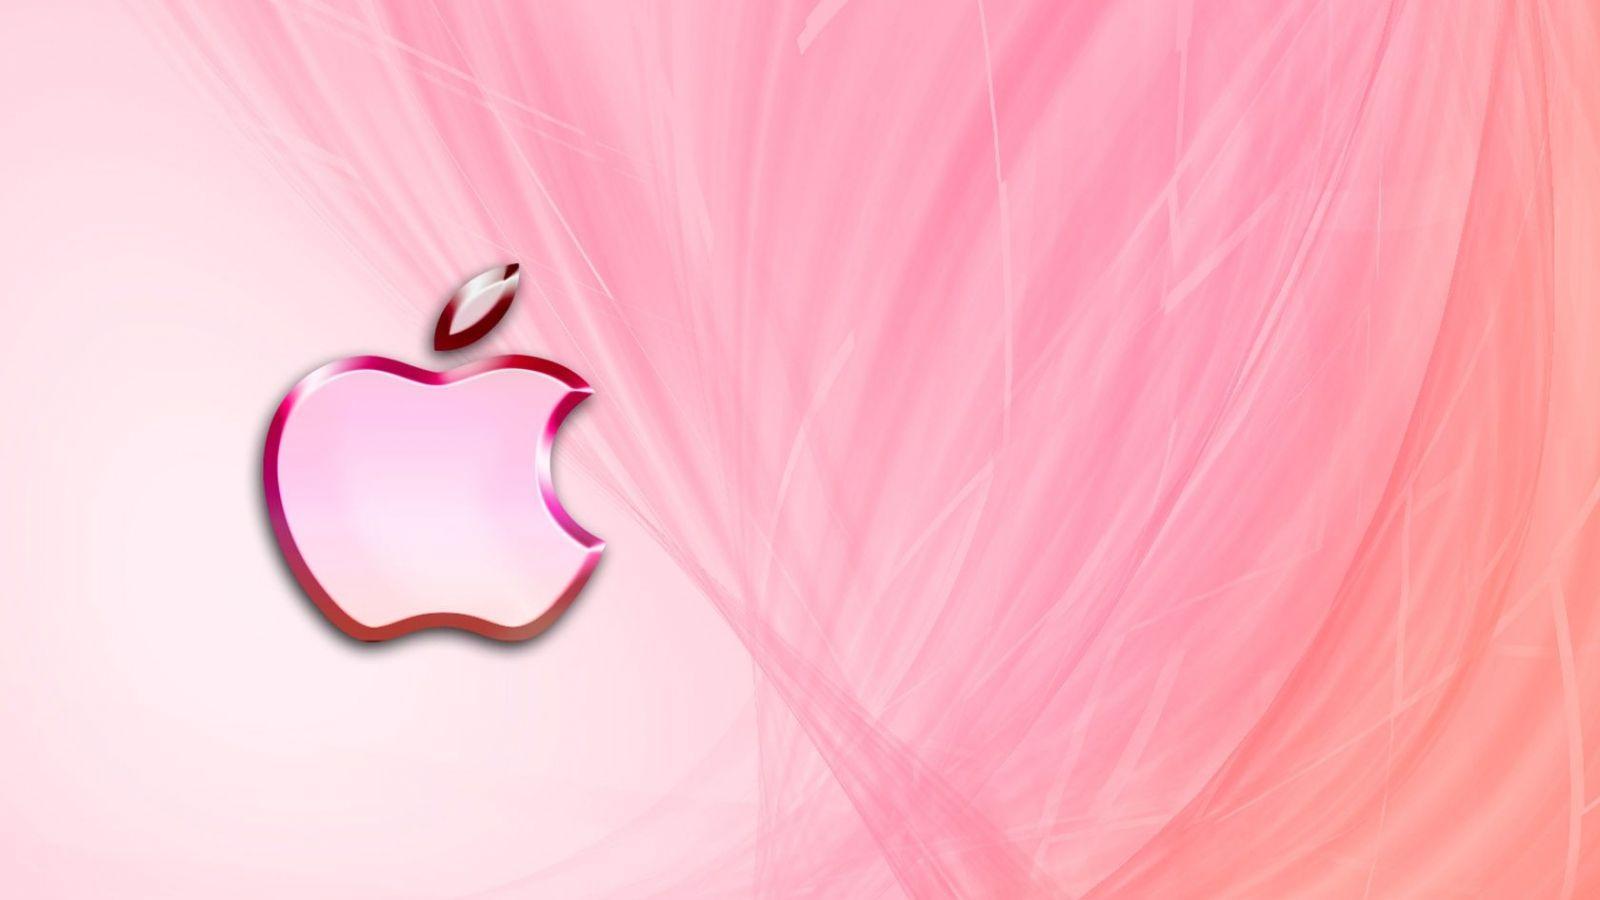 Apple Logo Yellow Pink Background 4K 5K HD Apple Wallpapers  HD Wallpapers   ID 95834